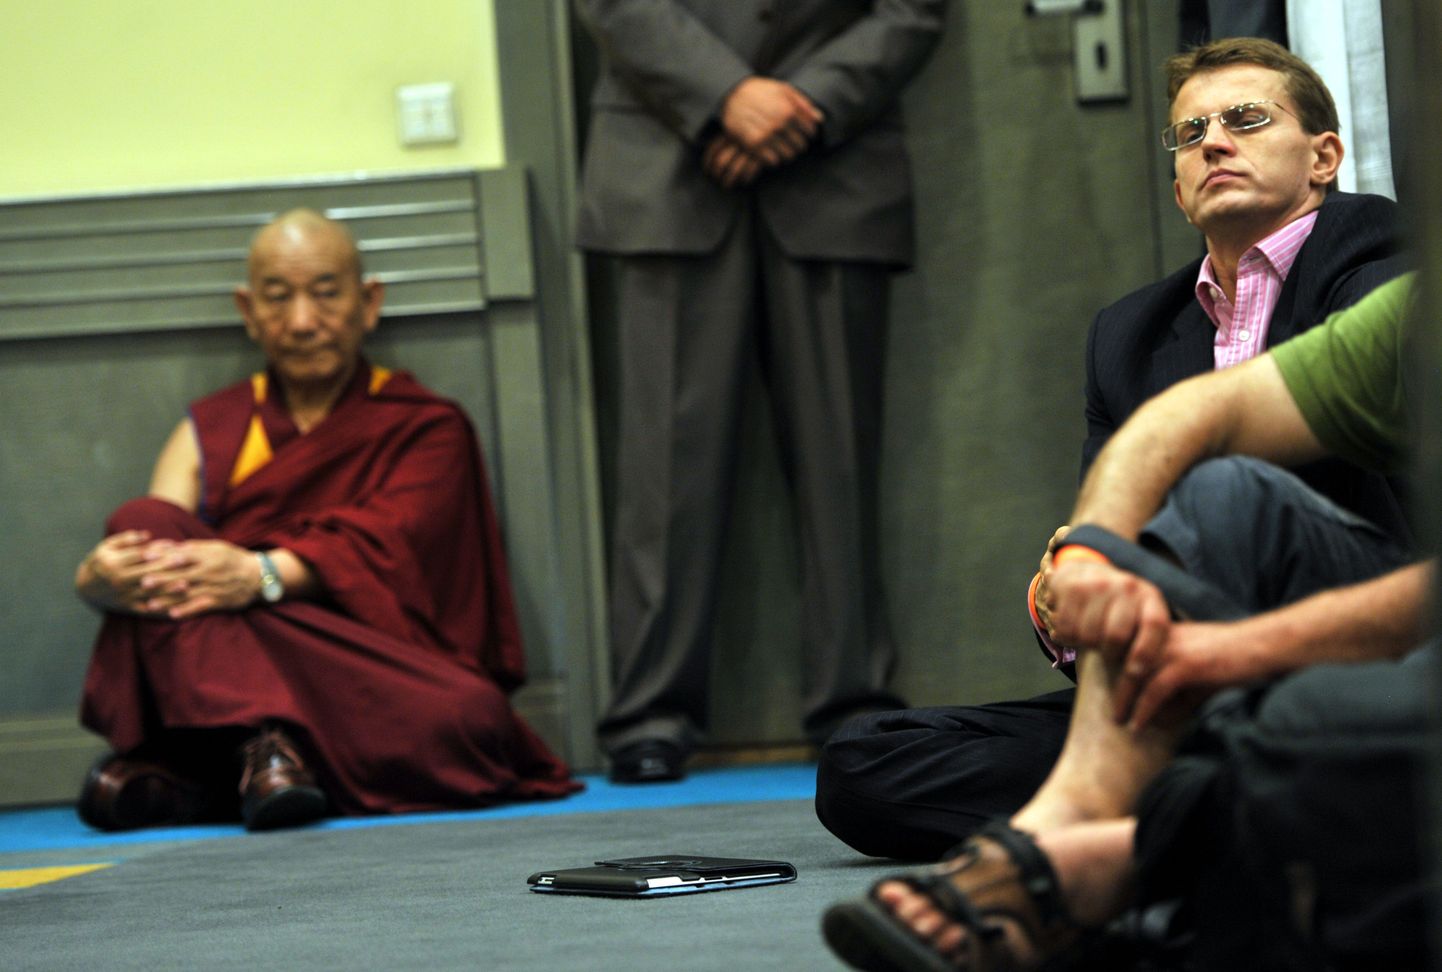 Siseminister Ken-Marti Vaher dalai-laama esinemise ajal